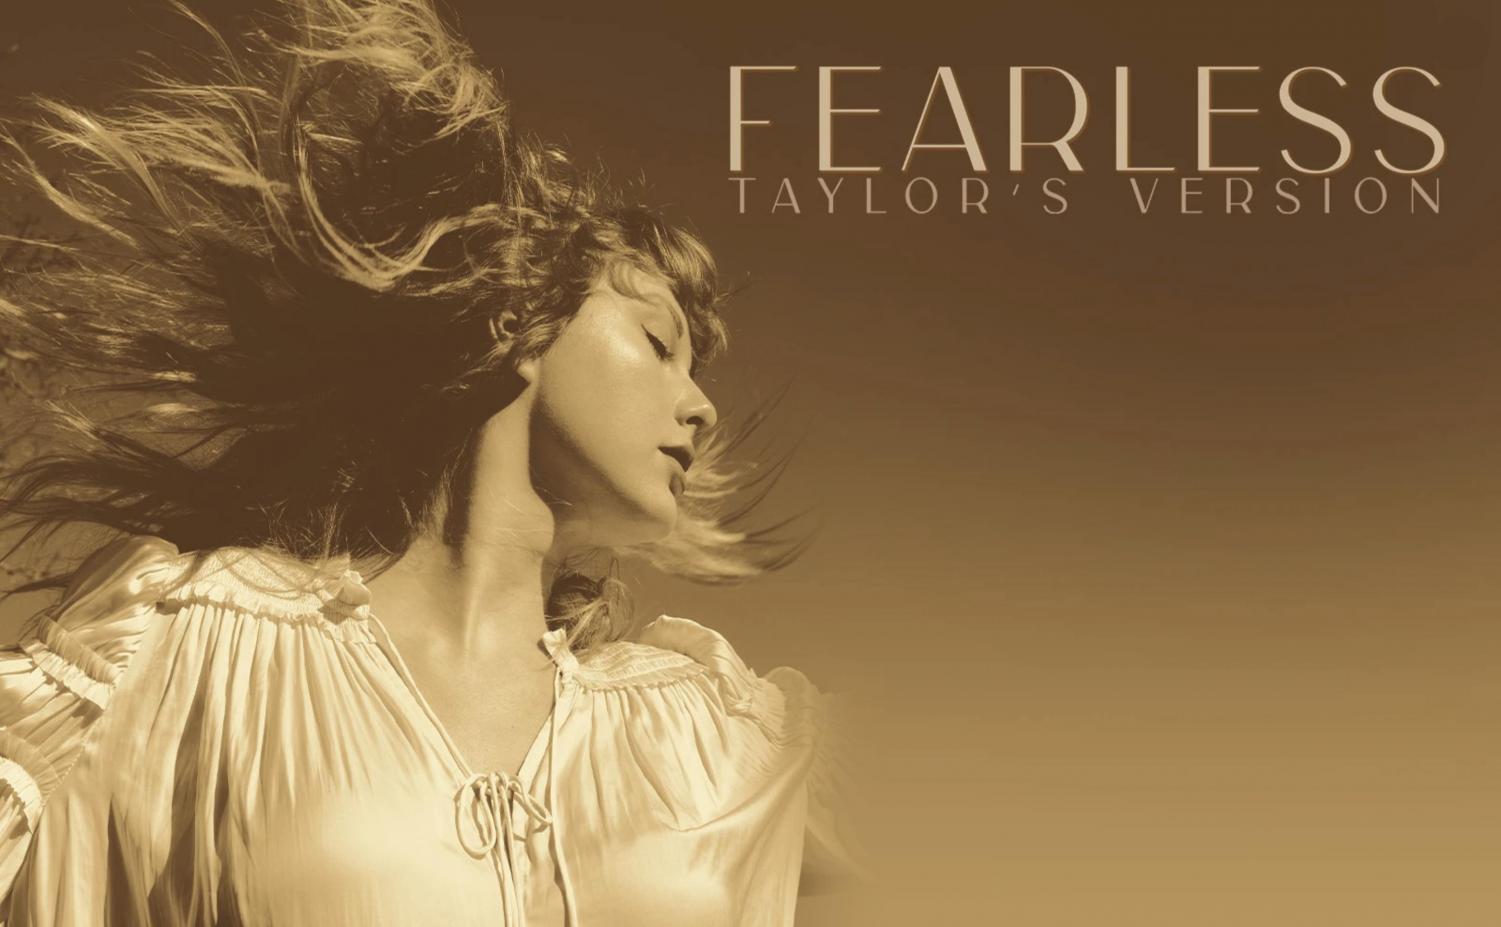 Taylor Swift's Original Album Covers vs. Taylor's Version